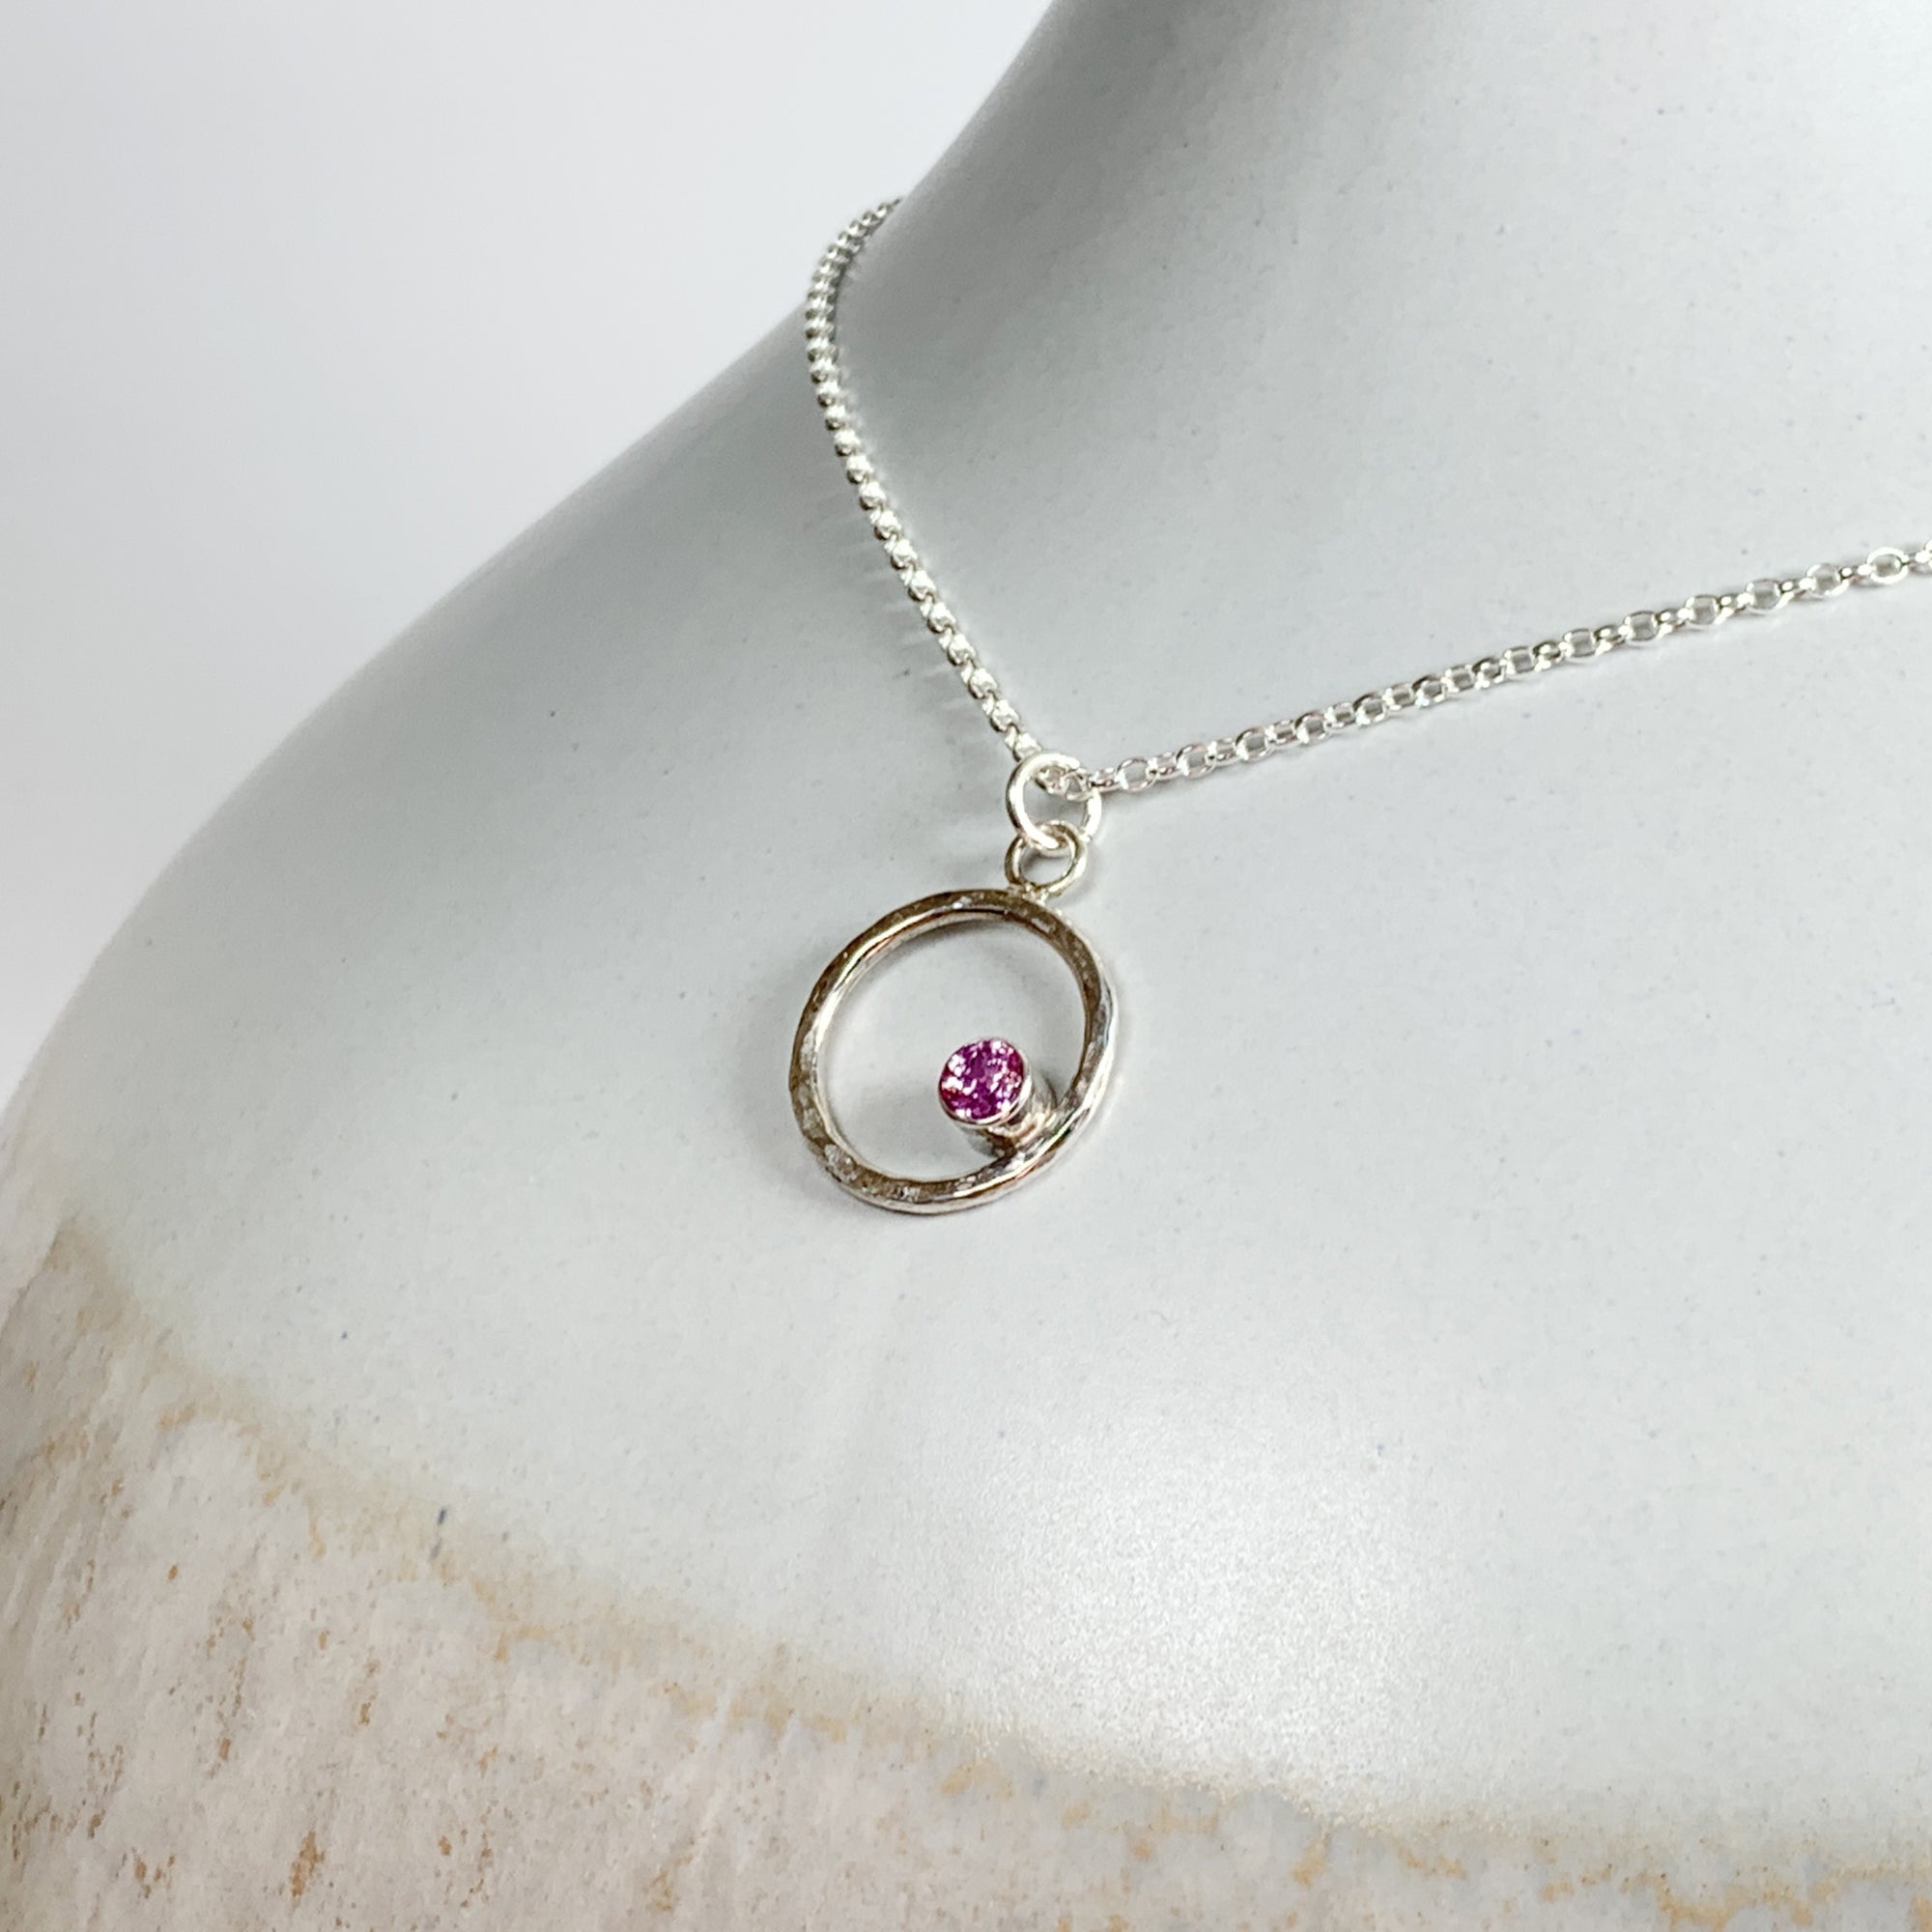 Caldera Eclissi Pink Sapphire Silver Pendant Necklace